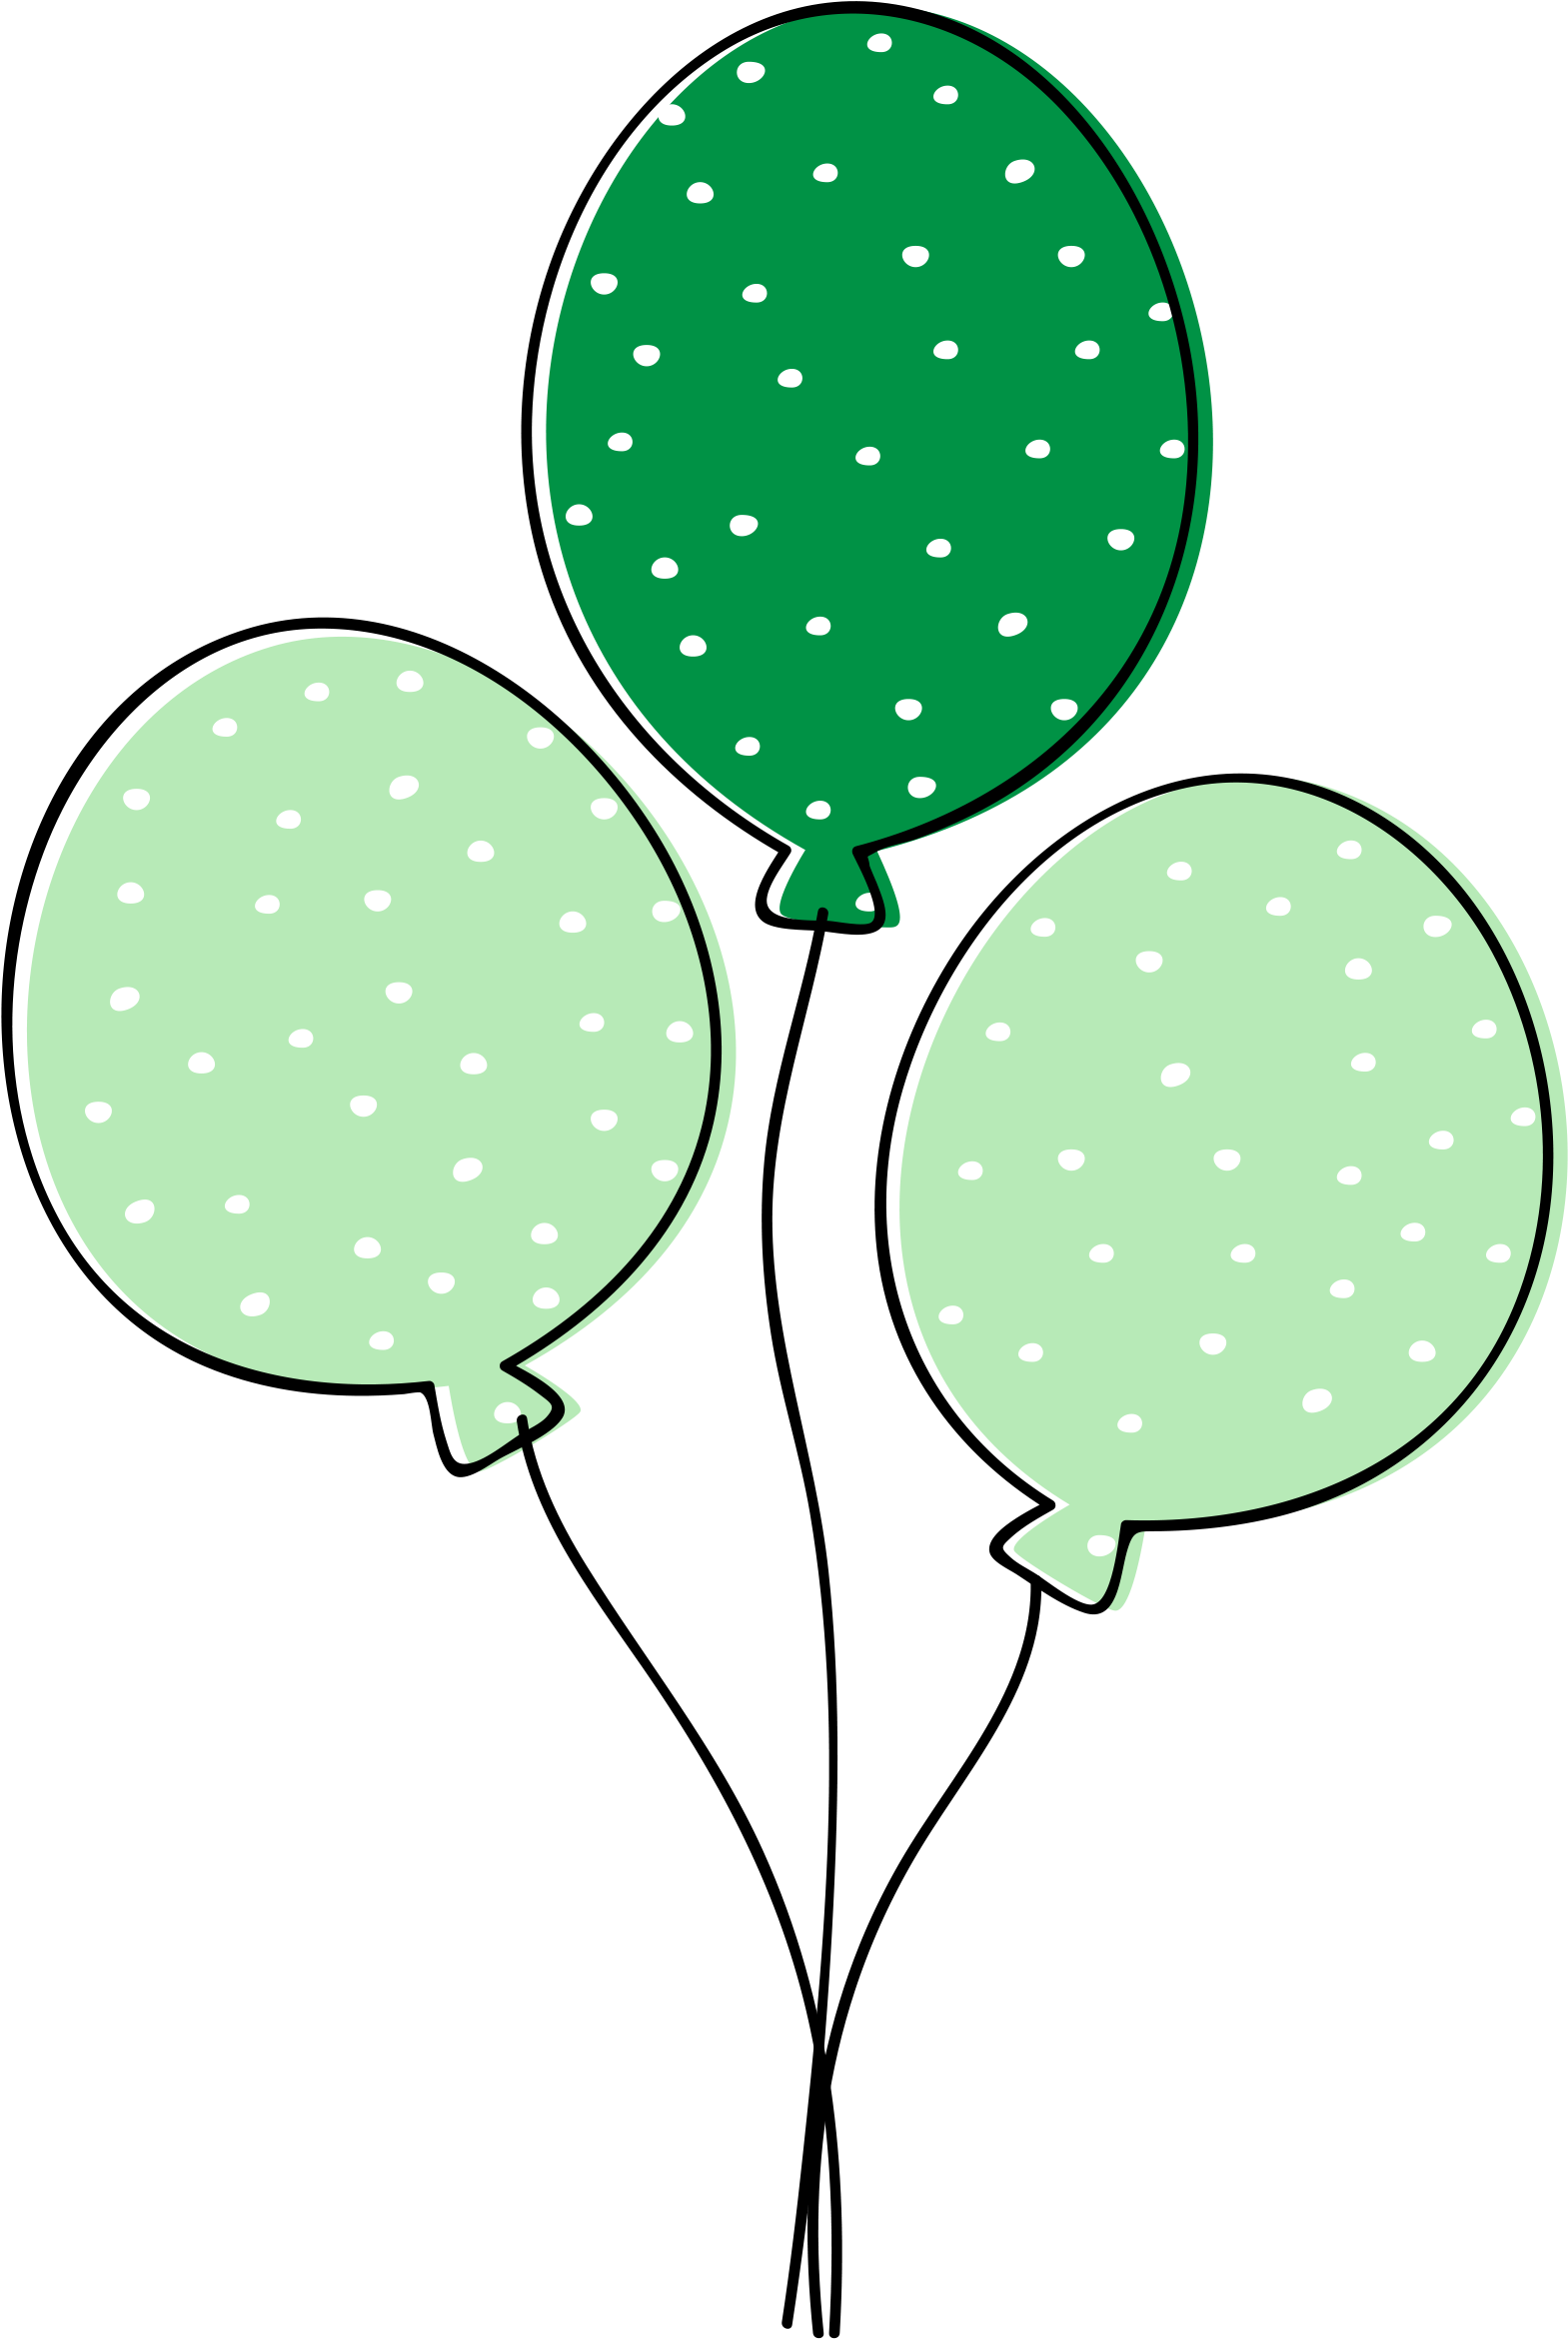 Balloon Green Free Download Image PNG Image